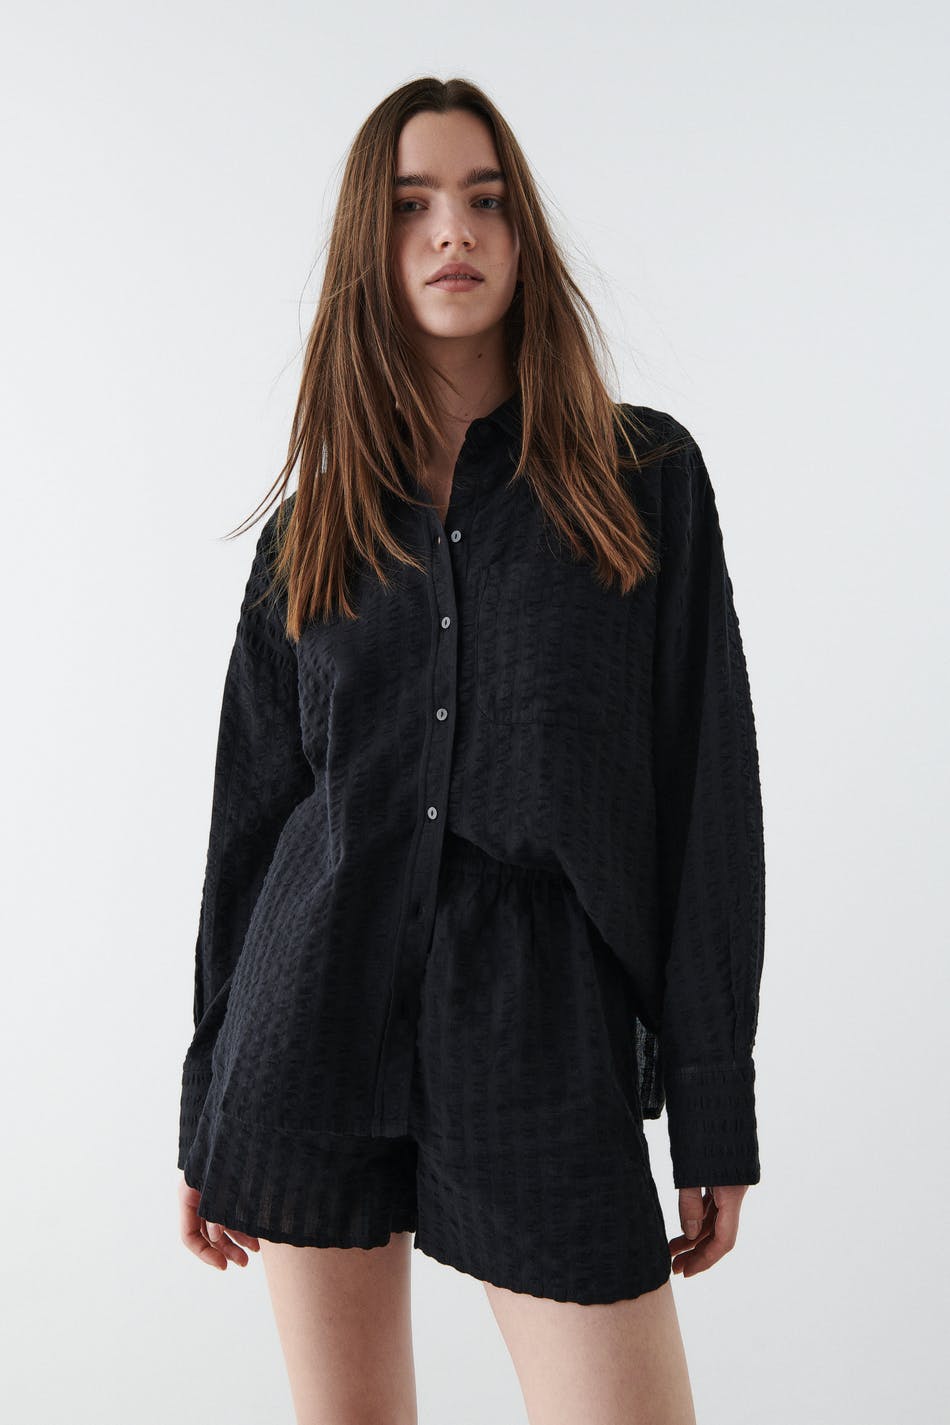 Gina Tricot Amanda pyjamas shorts XS  Black (9000)